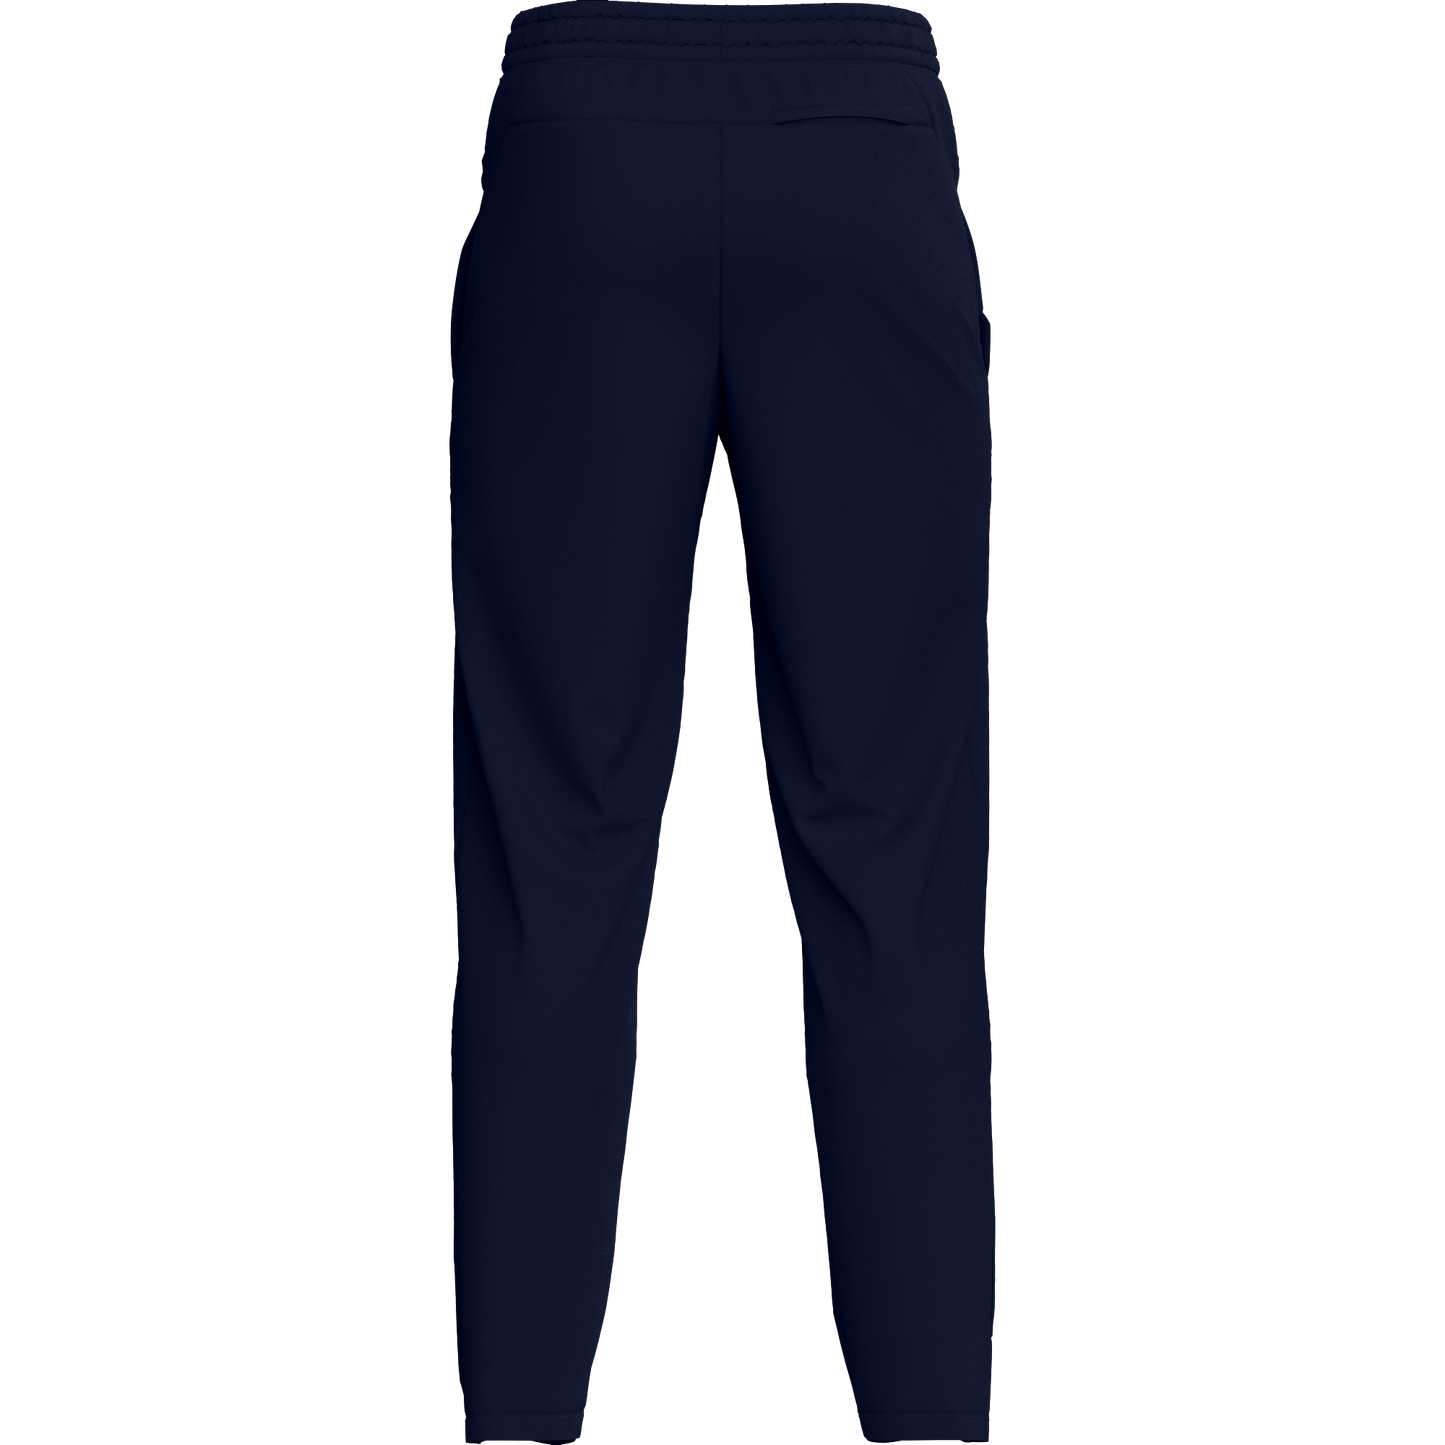 Men's Navy Blue Cotton Fleece Thermal Sweatpants